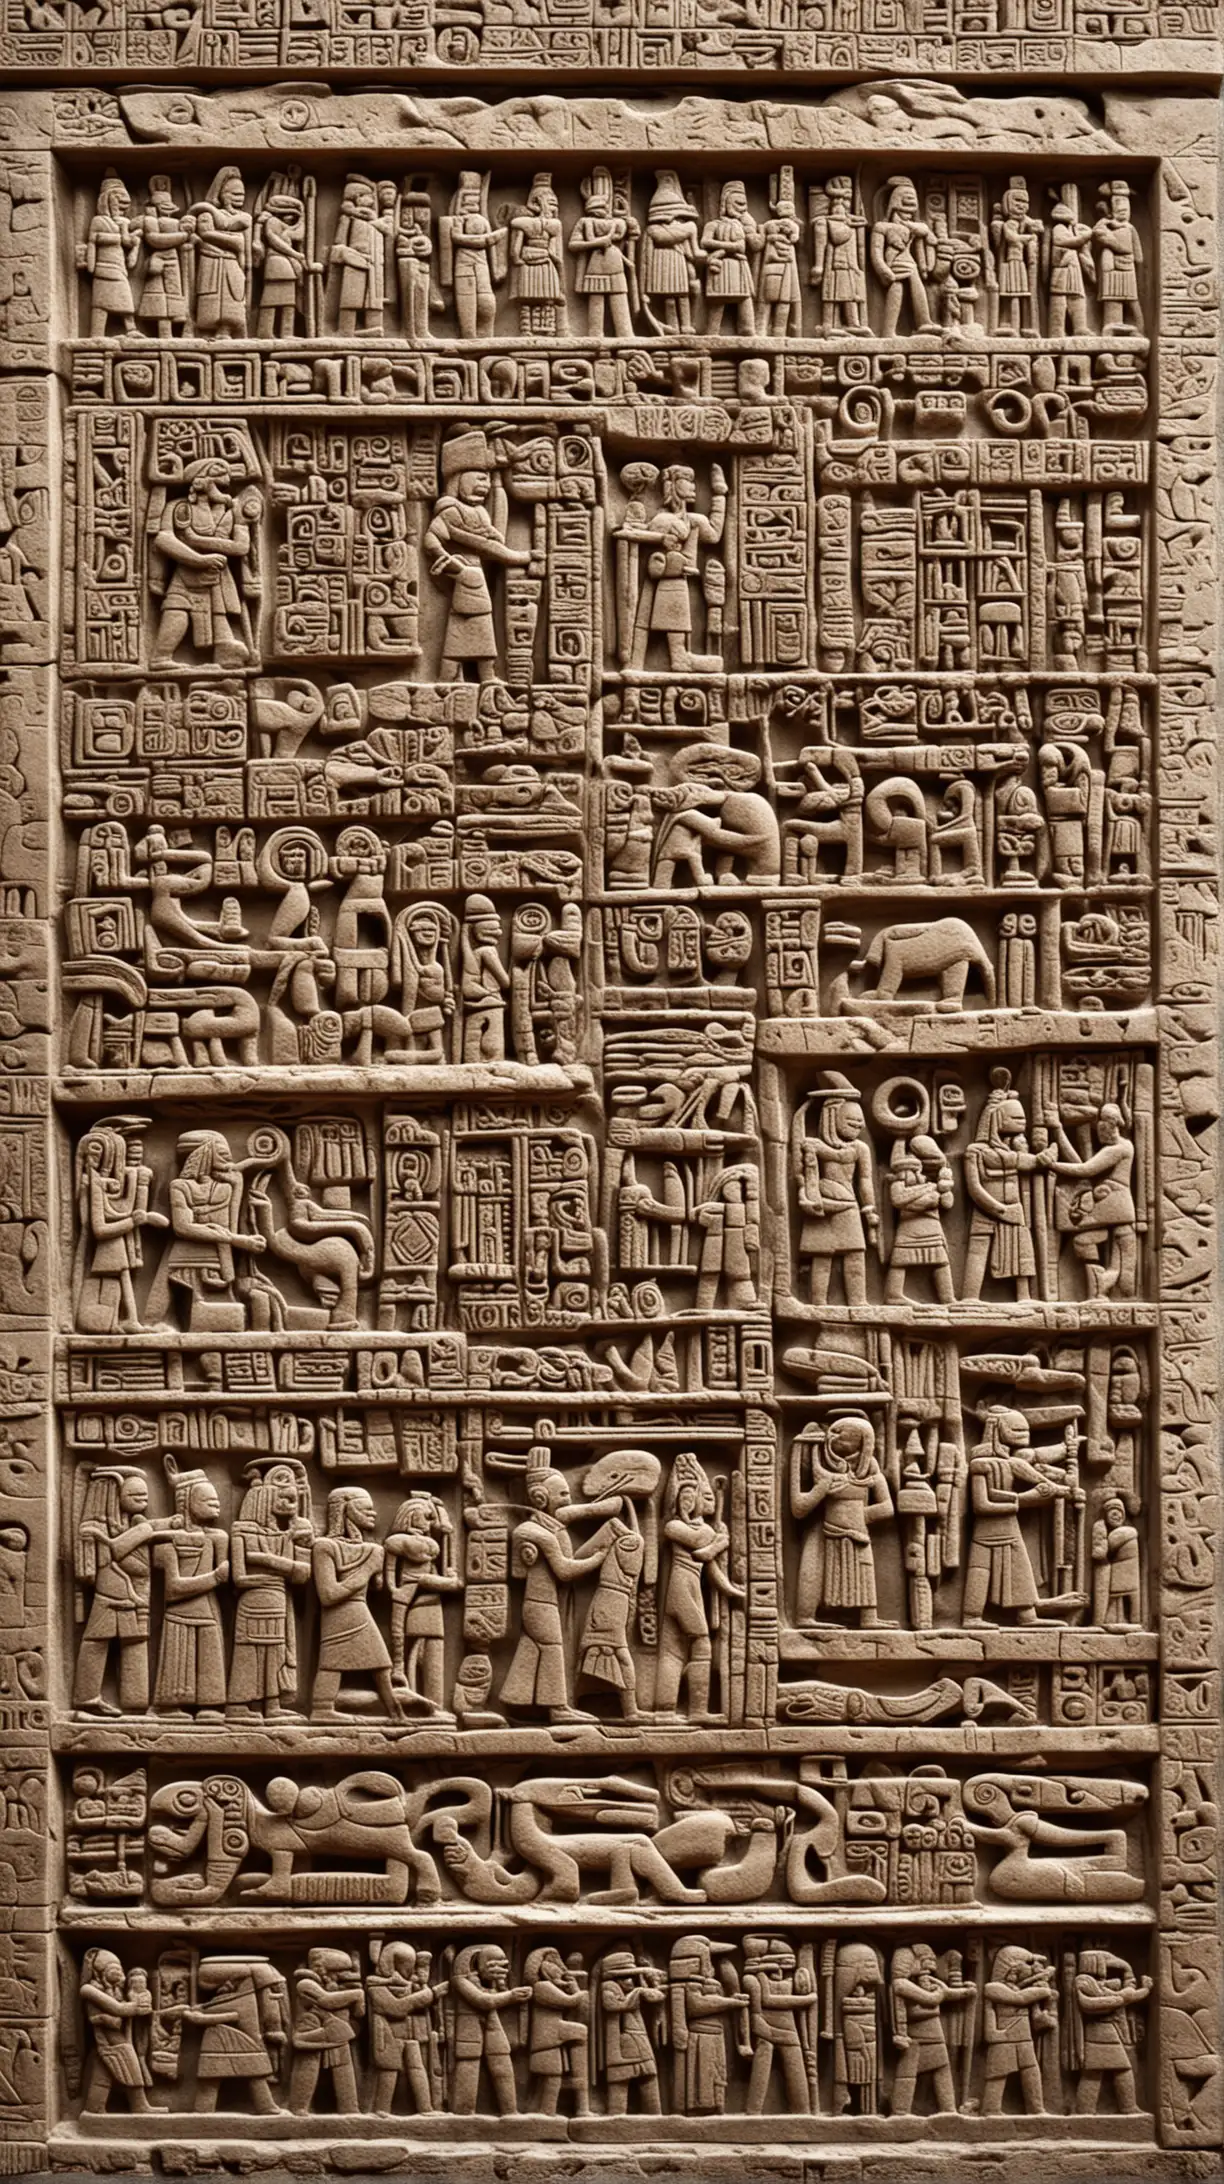 Detailed Carved Maya Glyphs and Hieroglyphs on Weathered Stone Stela